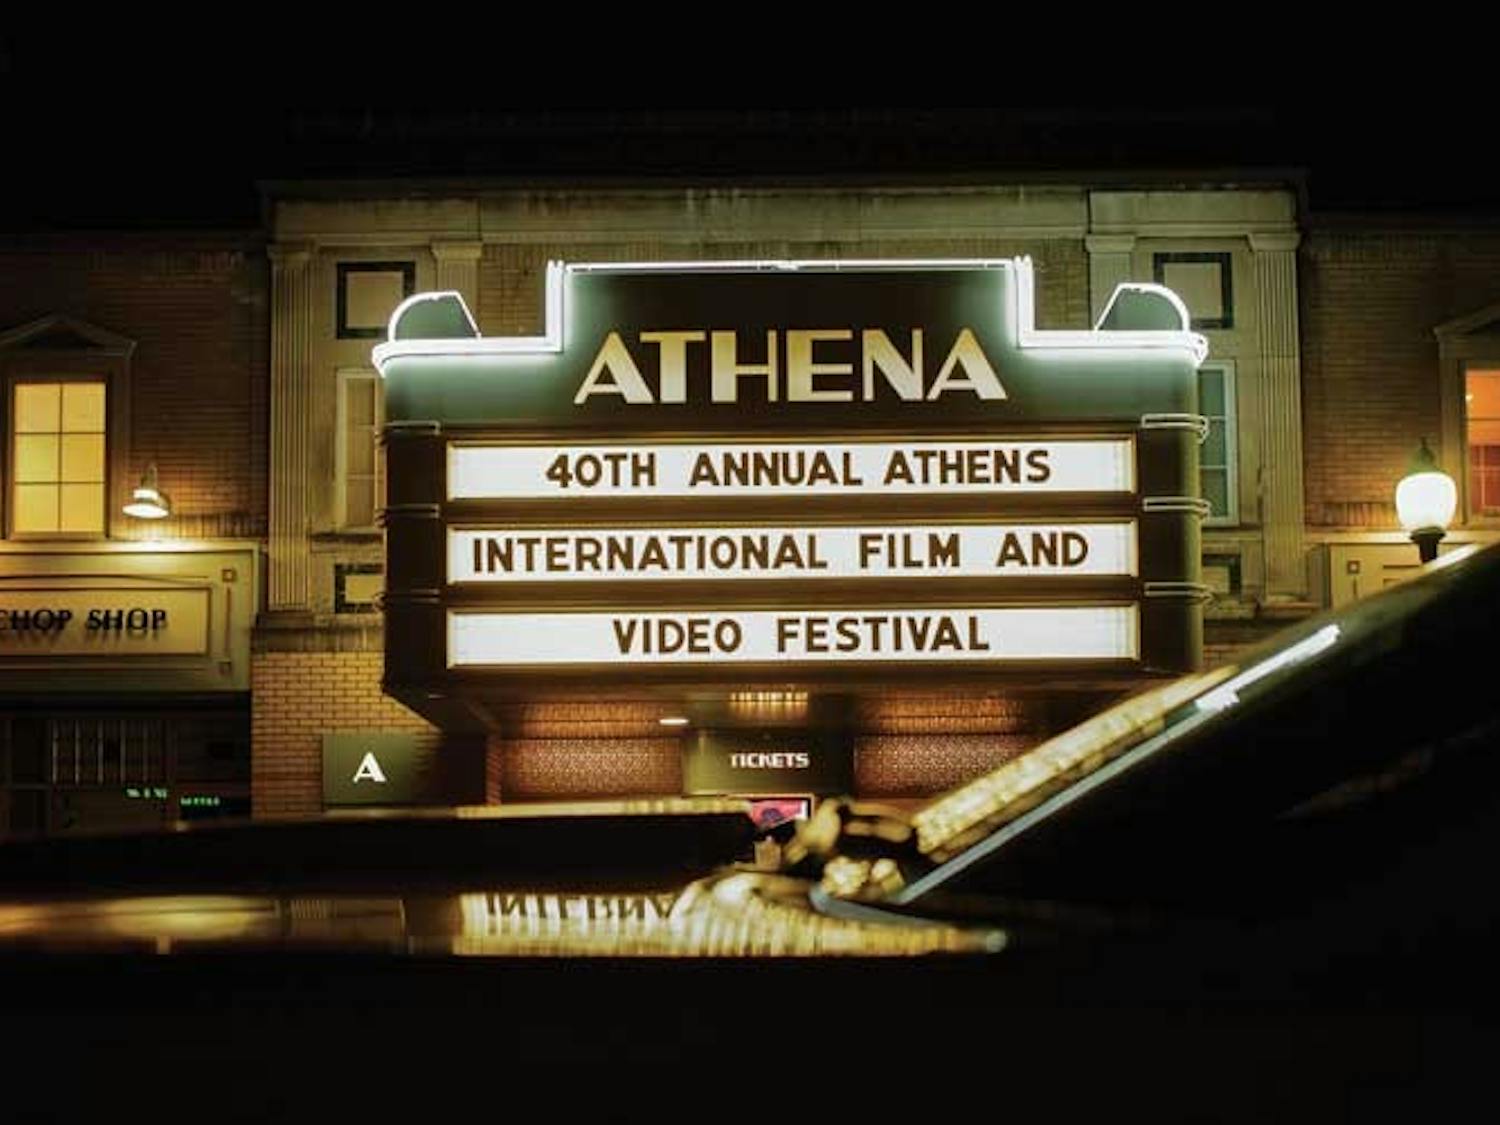 Athena festival showcases plethora of films  